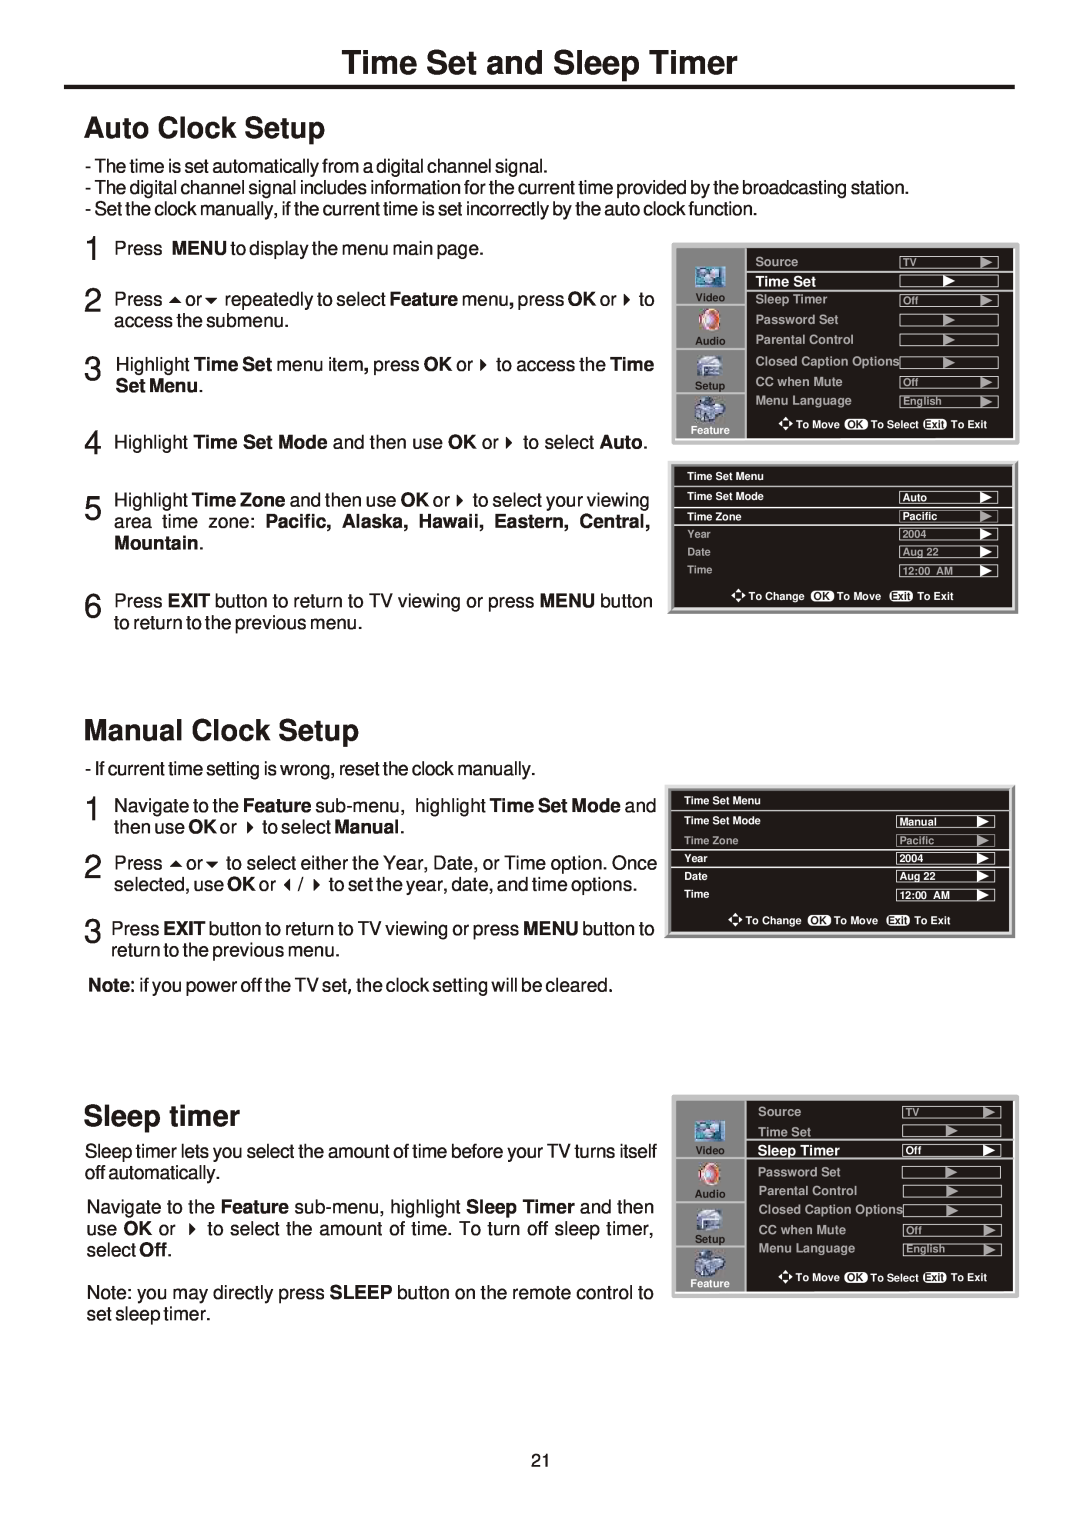 Sanyo 321, AVL-261, 263, 323 instruction manual Time Set and Sleep Timer, Auto Clock Setup, Manual Clock Setup, Sleep timer 